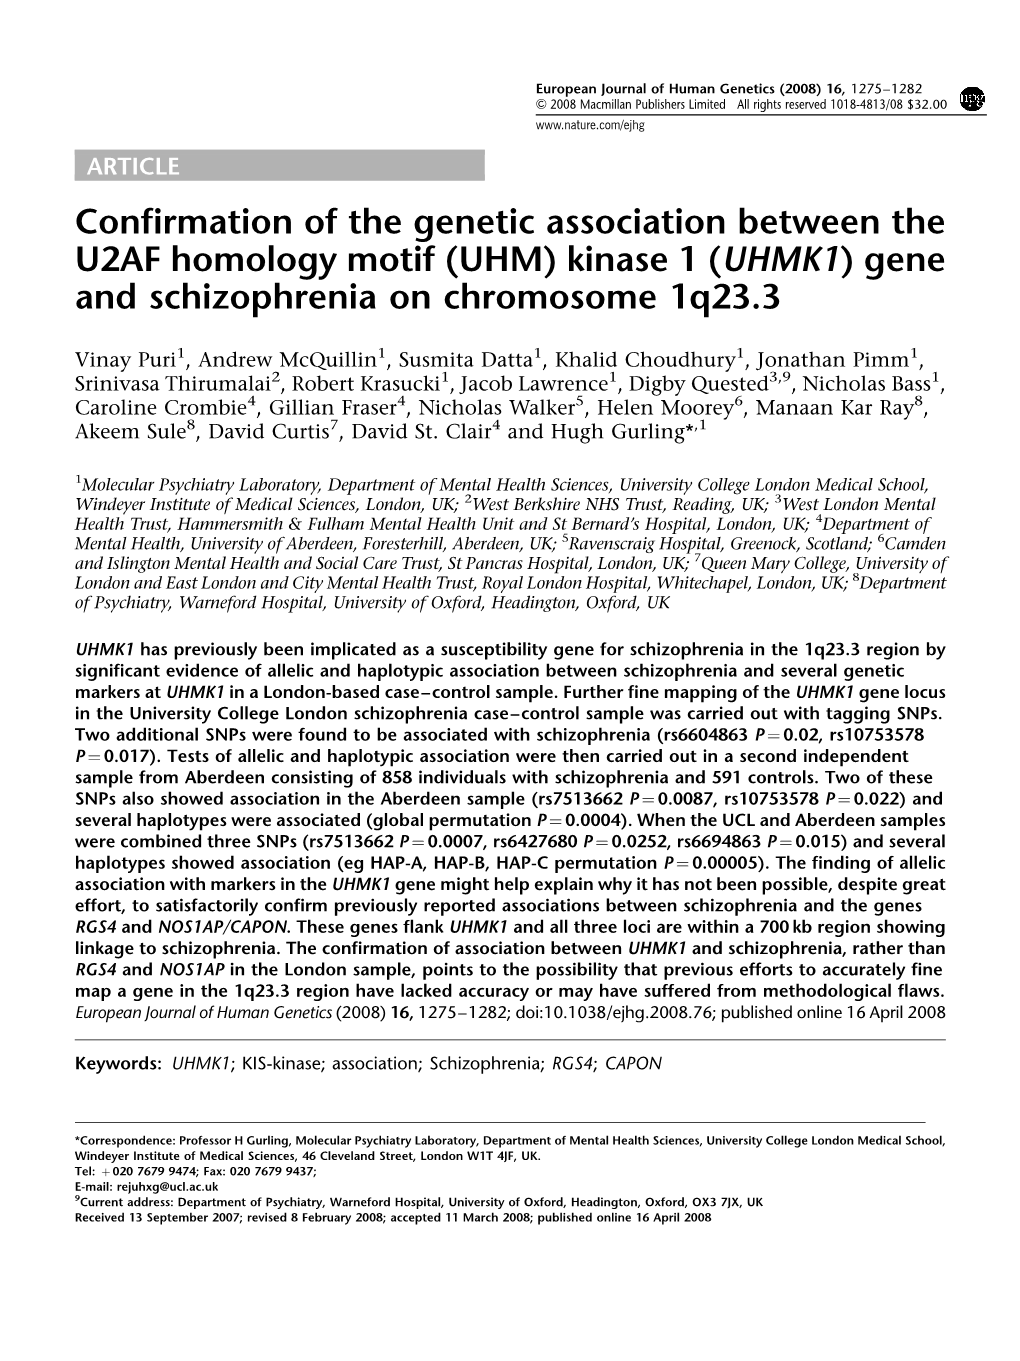 Confirmation of the Genetic Association Between the U2AF Homology Motif (UHM) Kinase 1 (UHMK1) Gene and Schizophrenia on Chromosome 1Q23.3